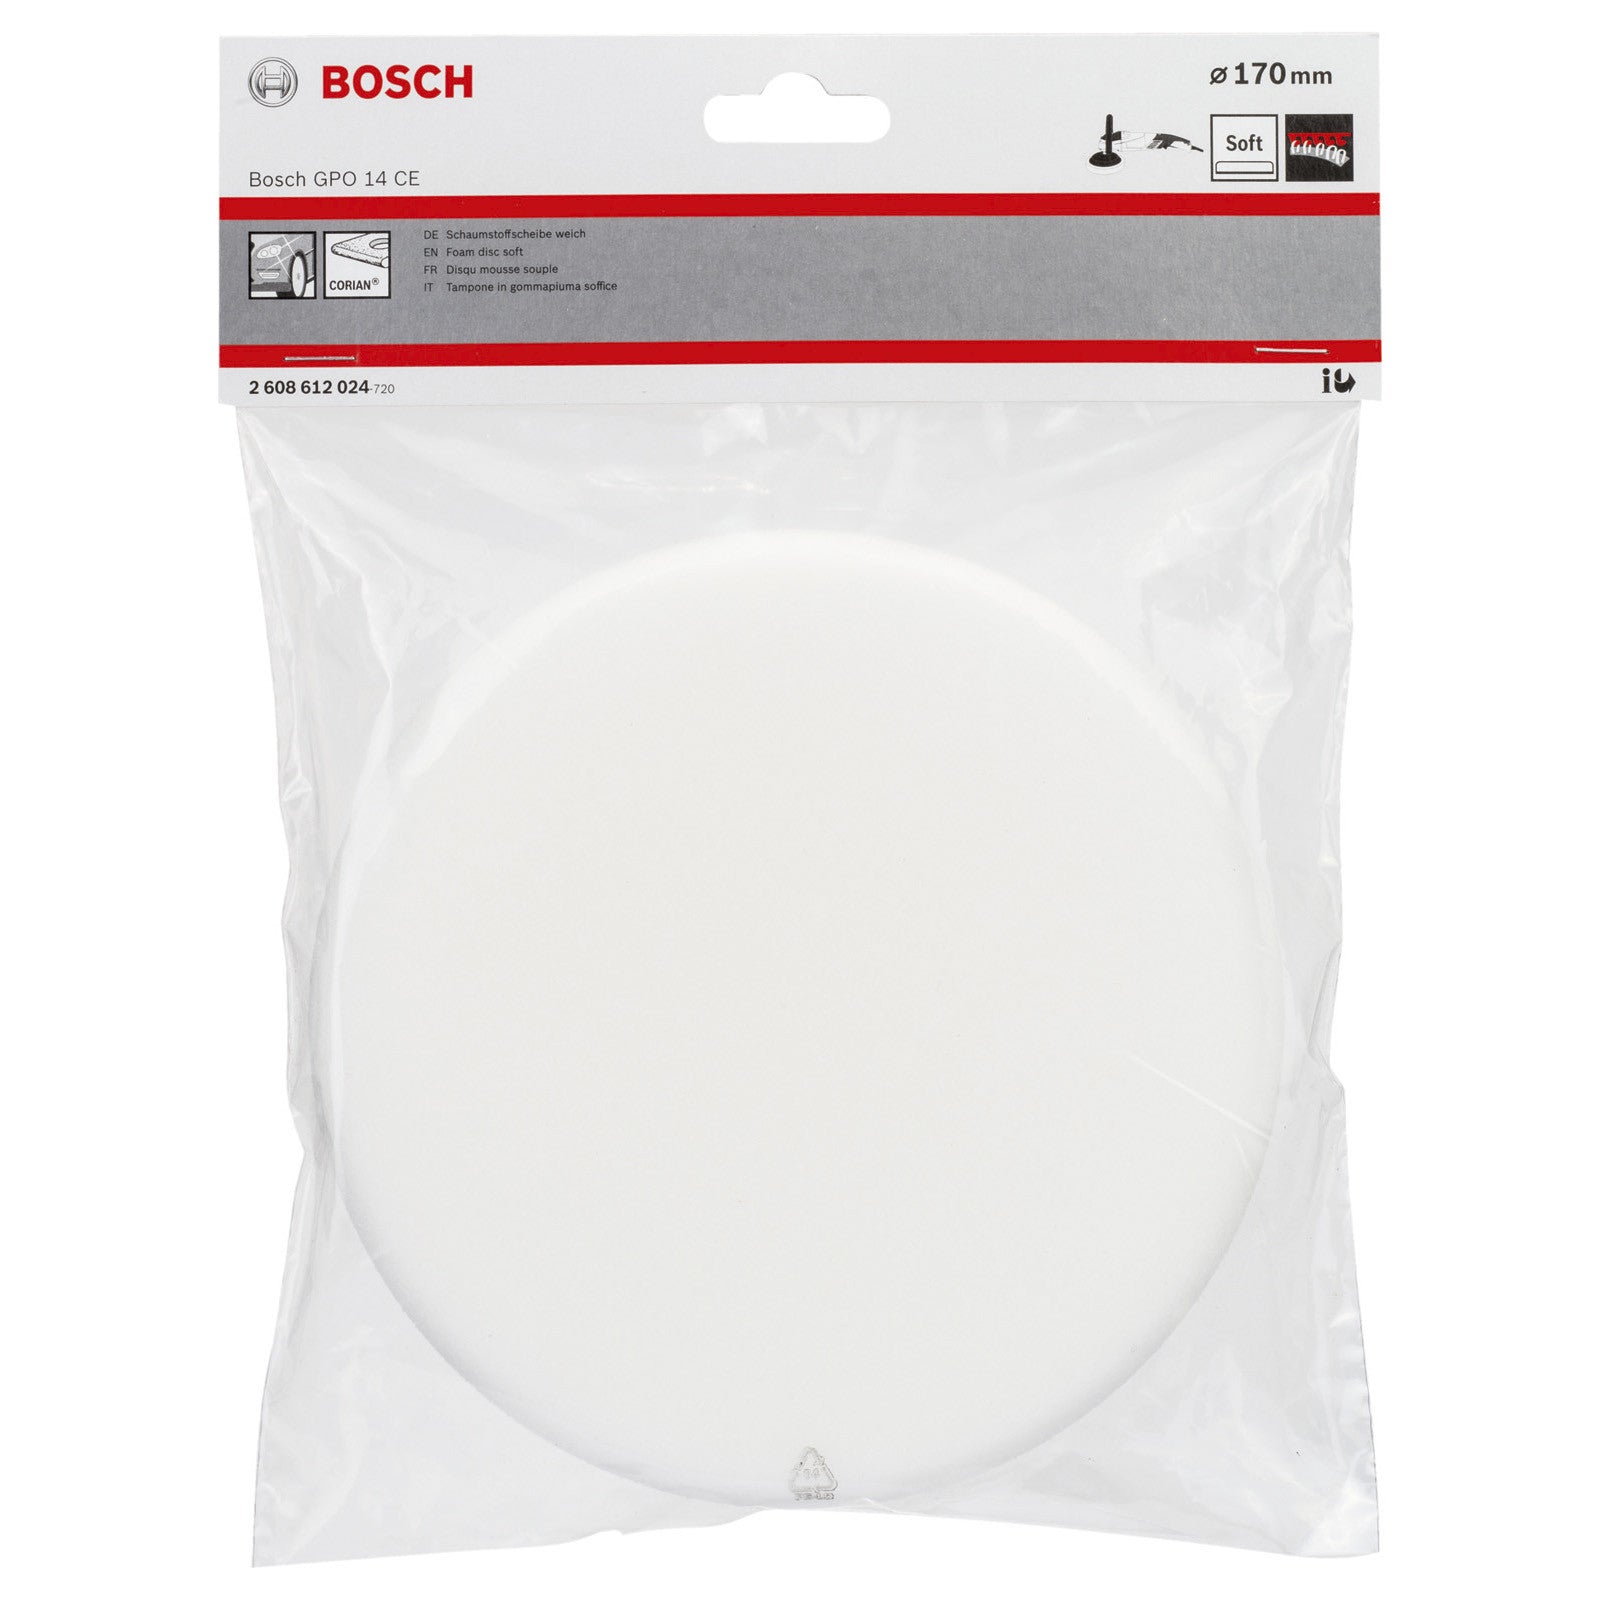 Bosch Polishing Sponge, 170mm soft 2608612024 Power Tool Services